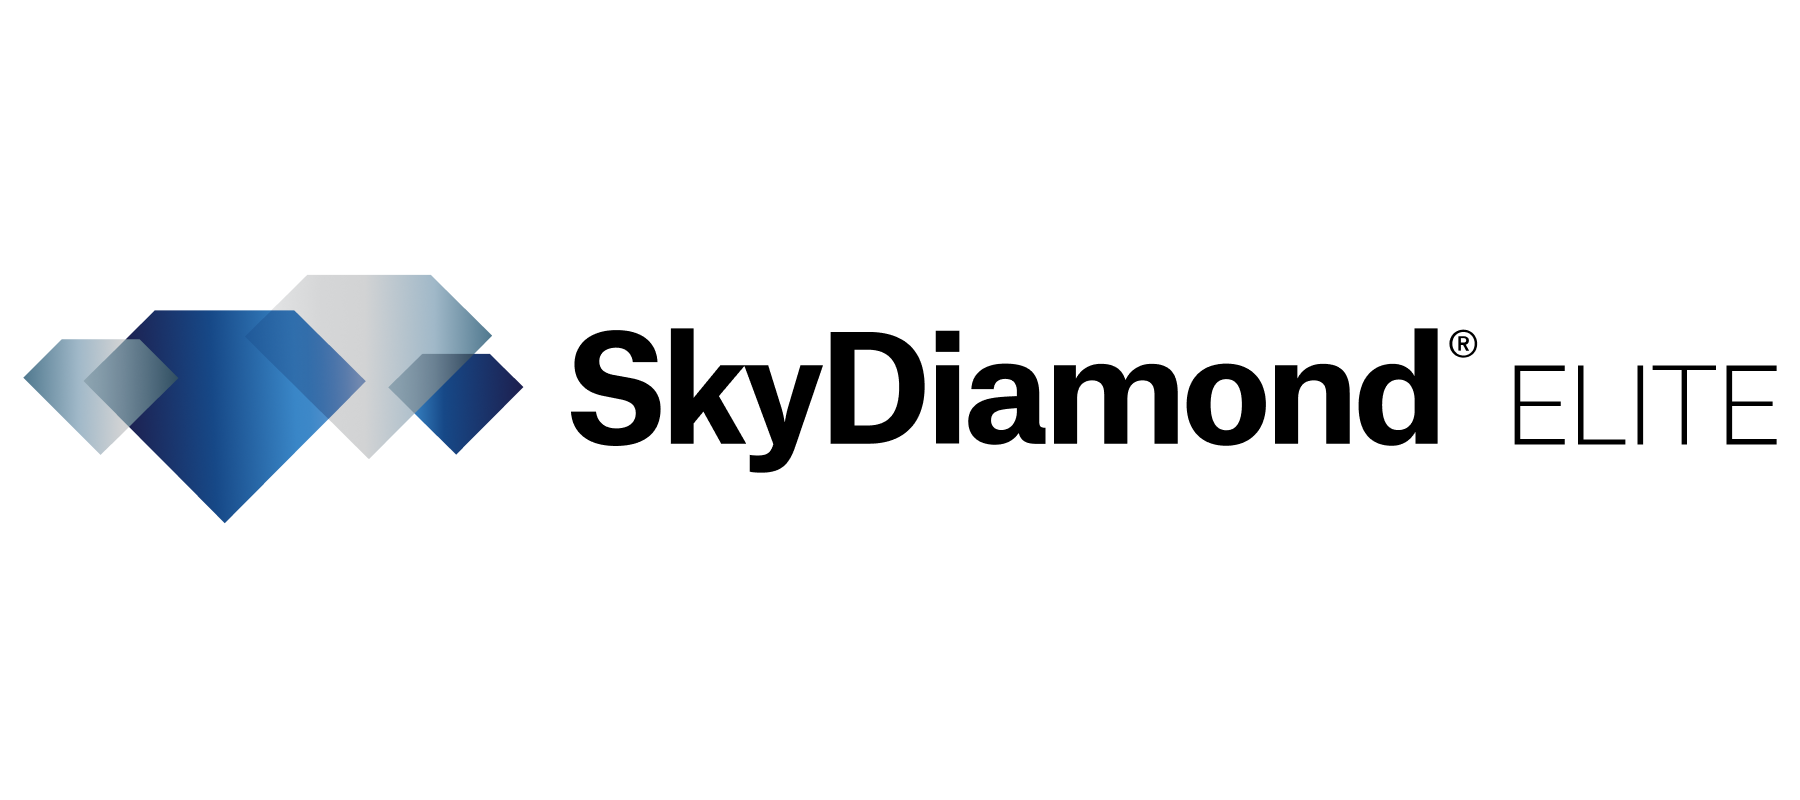 skydiamond-elite-logo